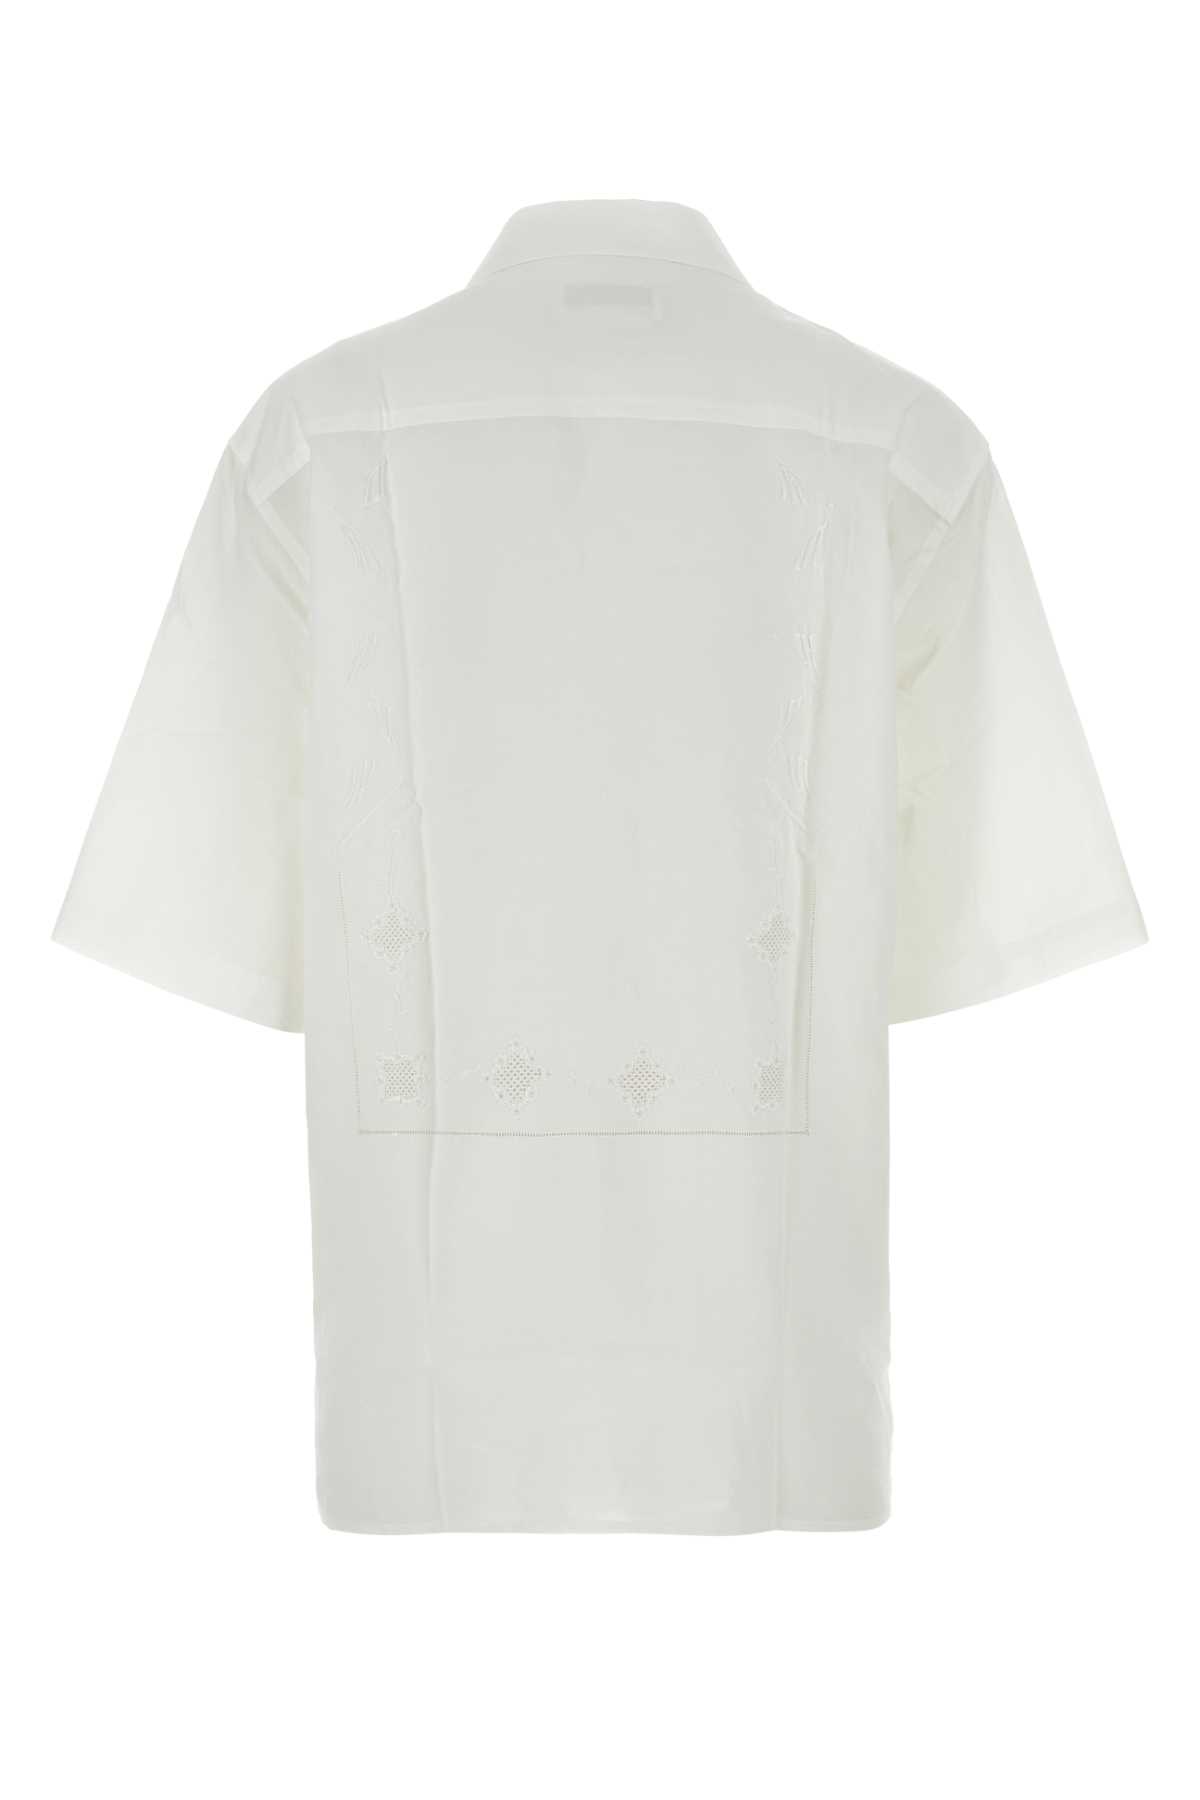 Shop Marine Serre White Cotton Shirt